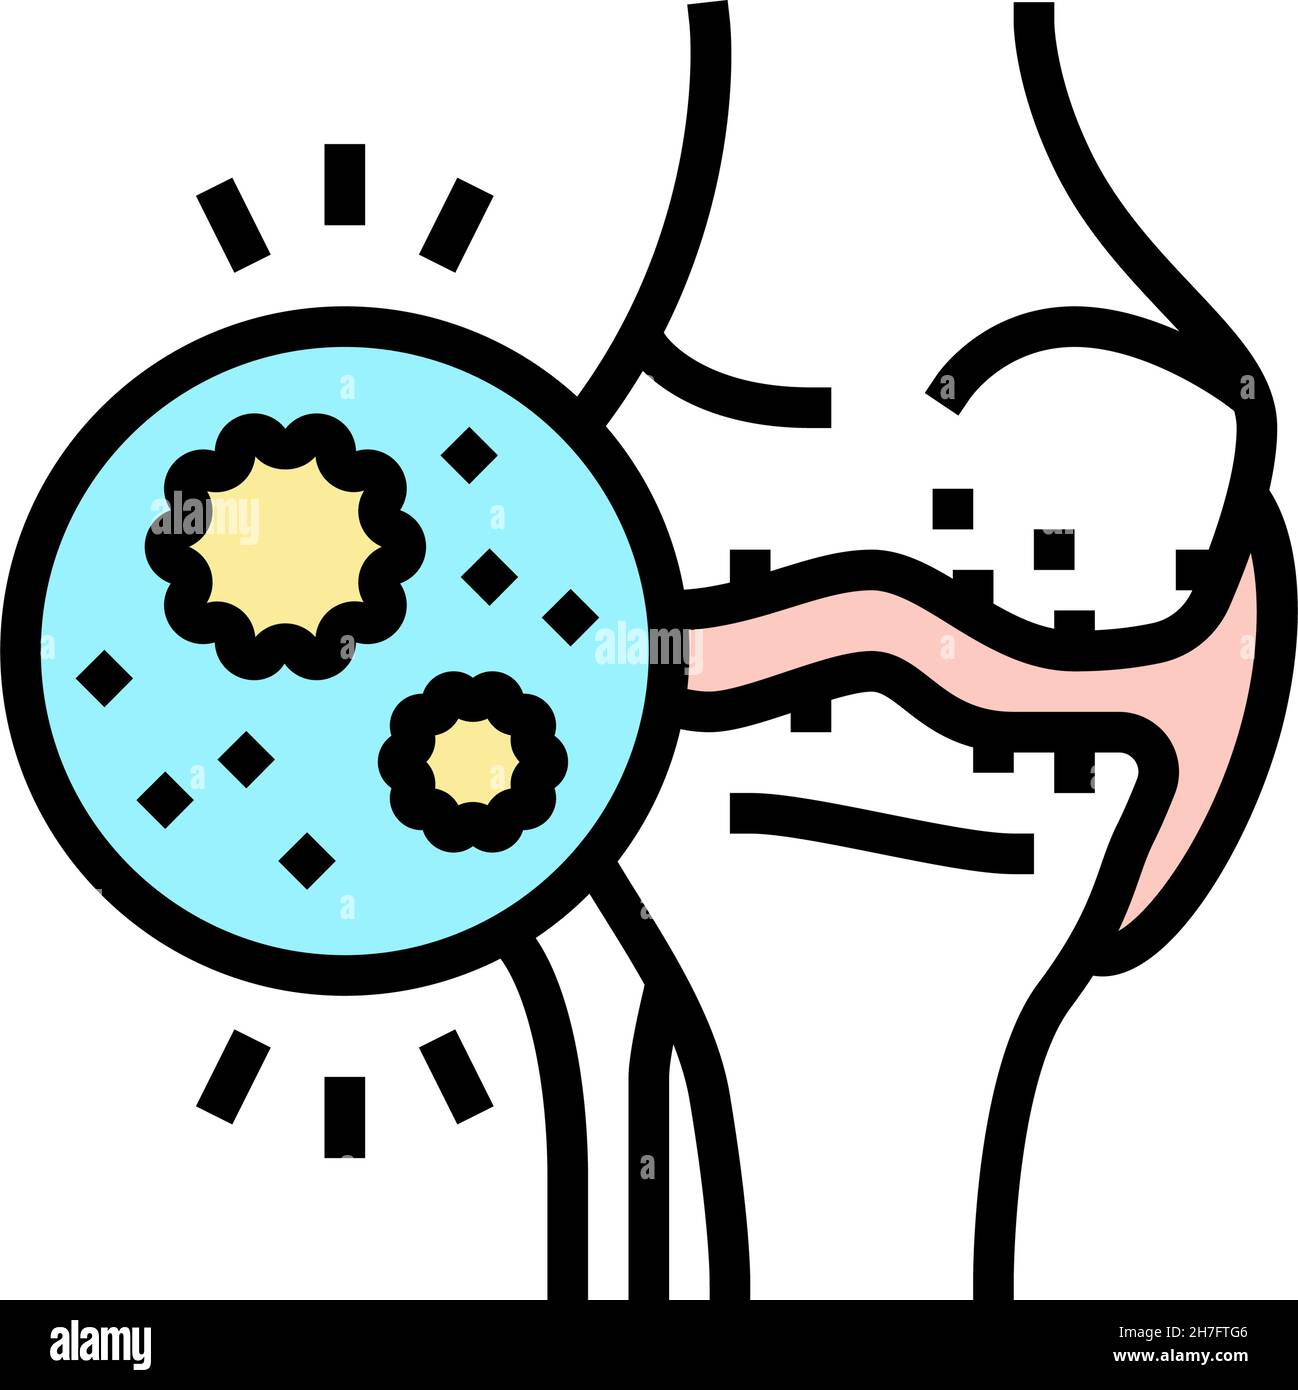 Vektor-Illustration mit Symbolen für infektiöse Arthritis Stock Vektor